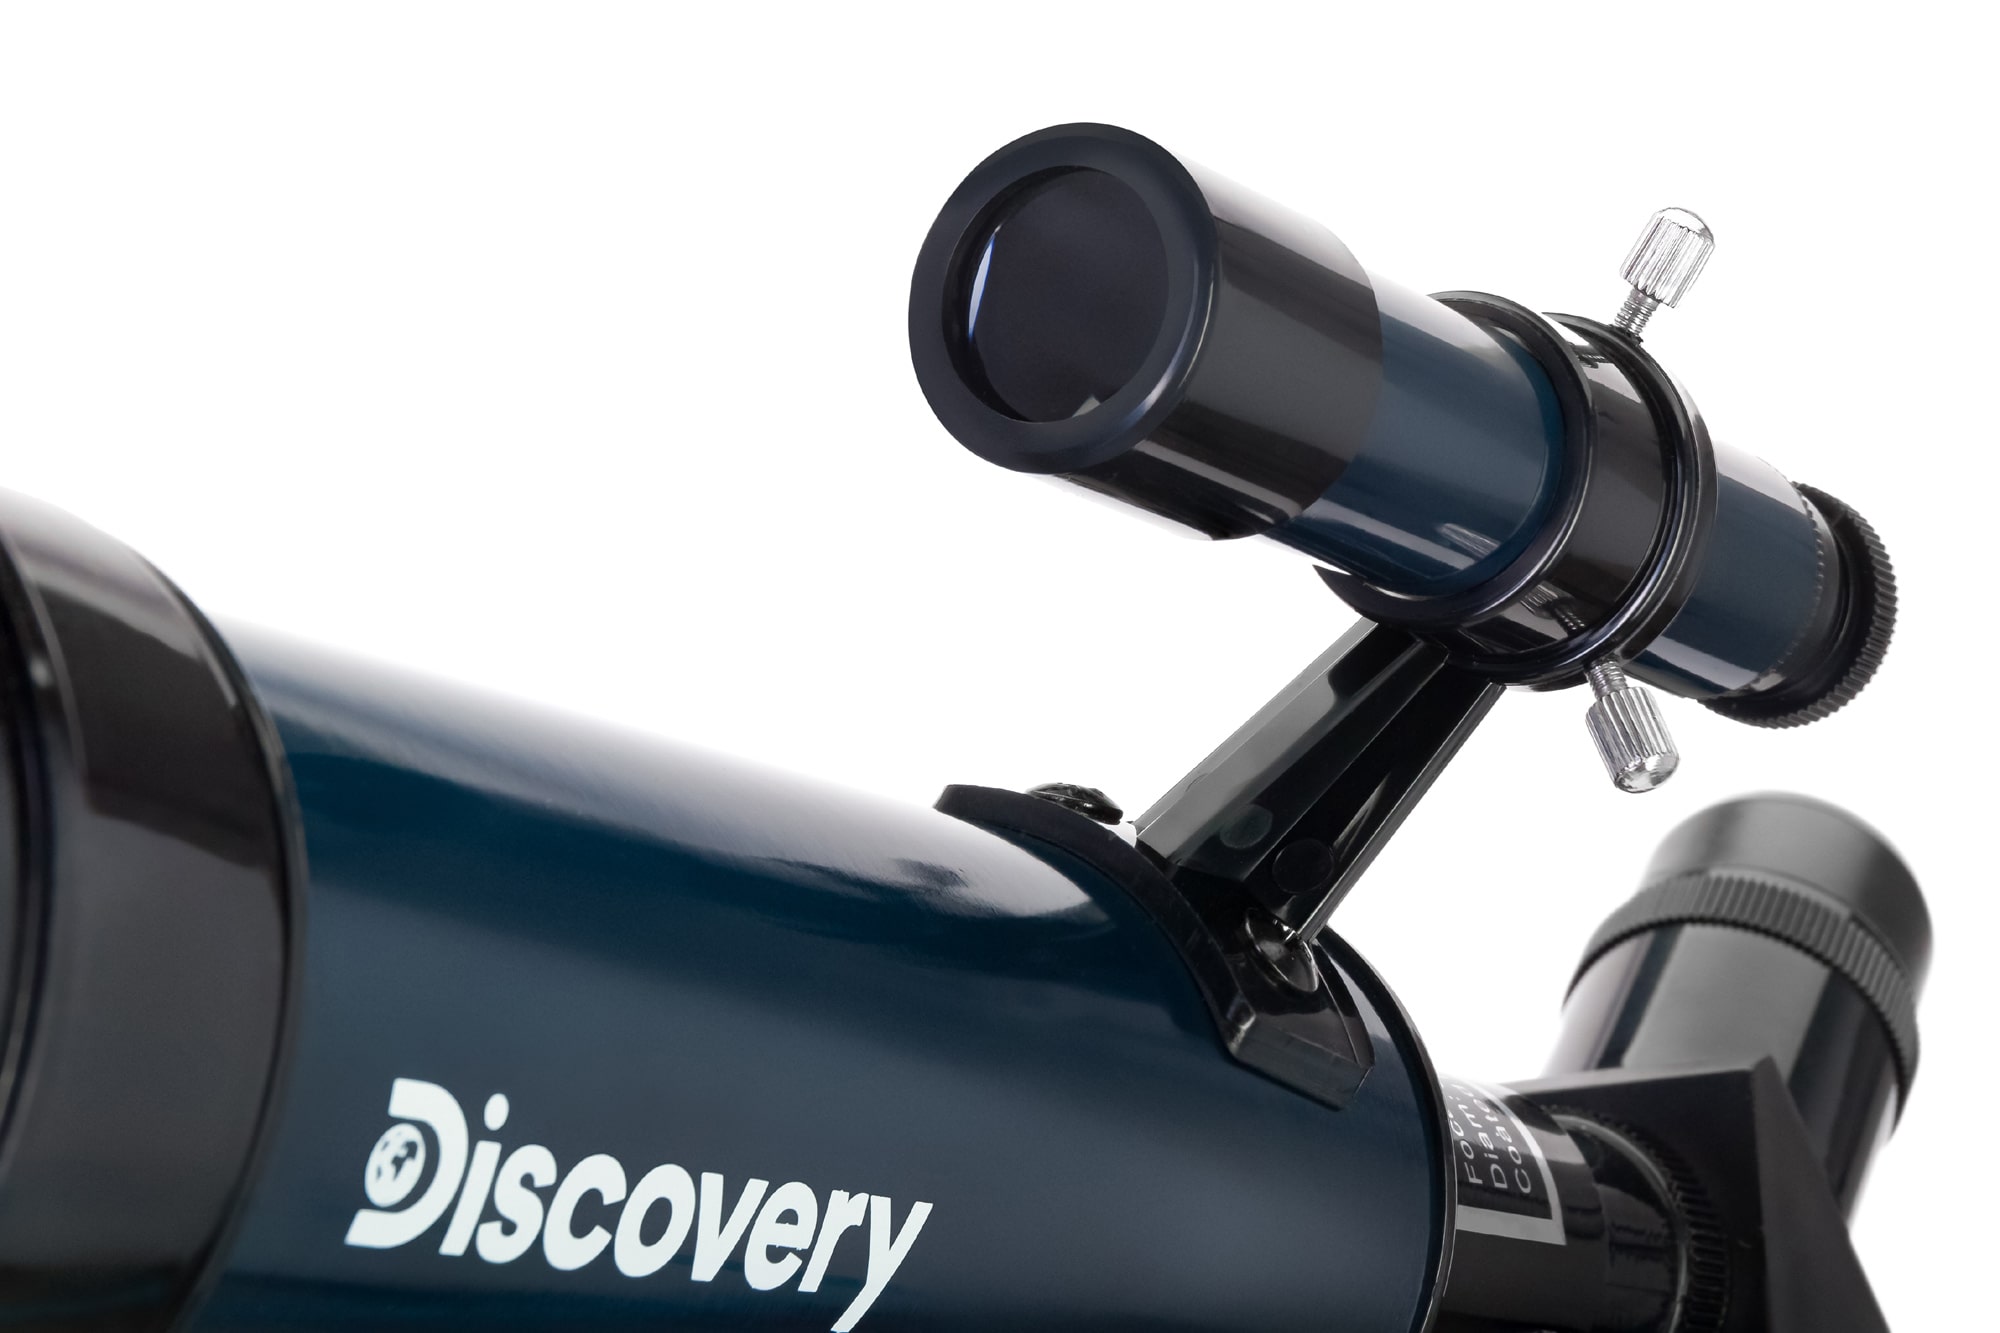 Телескоп Discovery Sky Trip ST50 с книгой